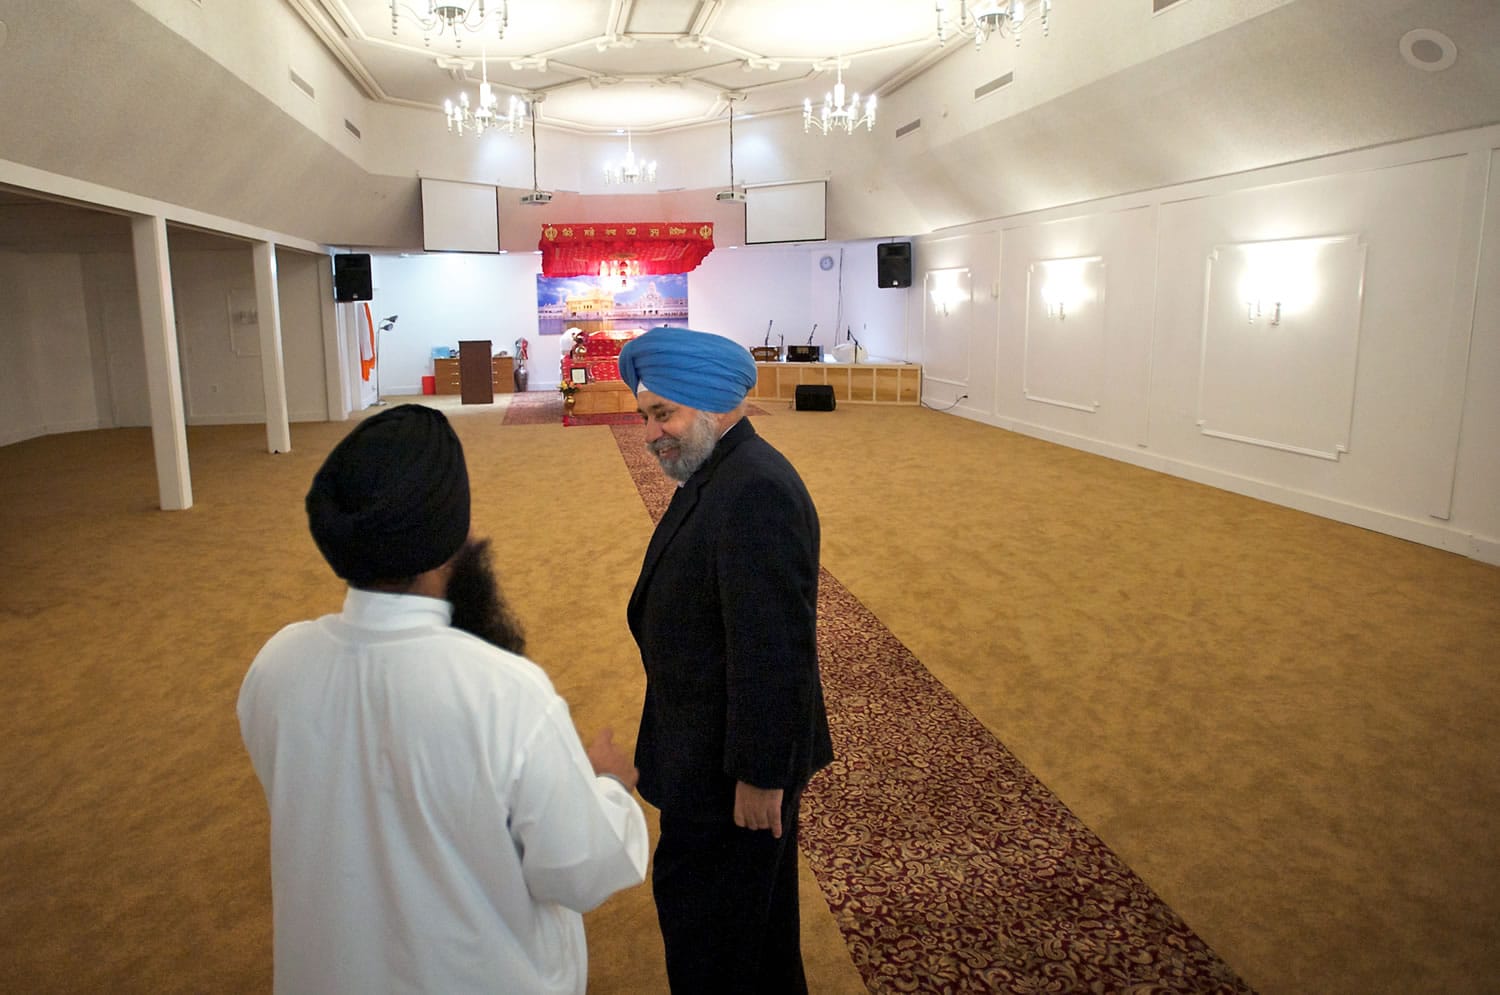 Jagjit Prehar Singh, right, talks to Sukwinder Singh inside Gurudwara Sahib Vancouver.